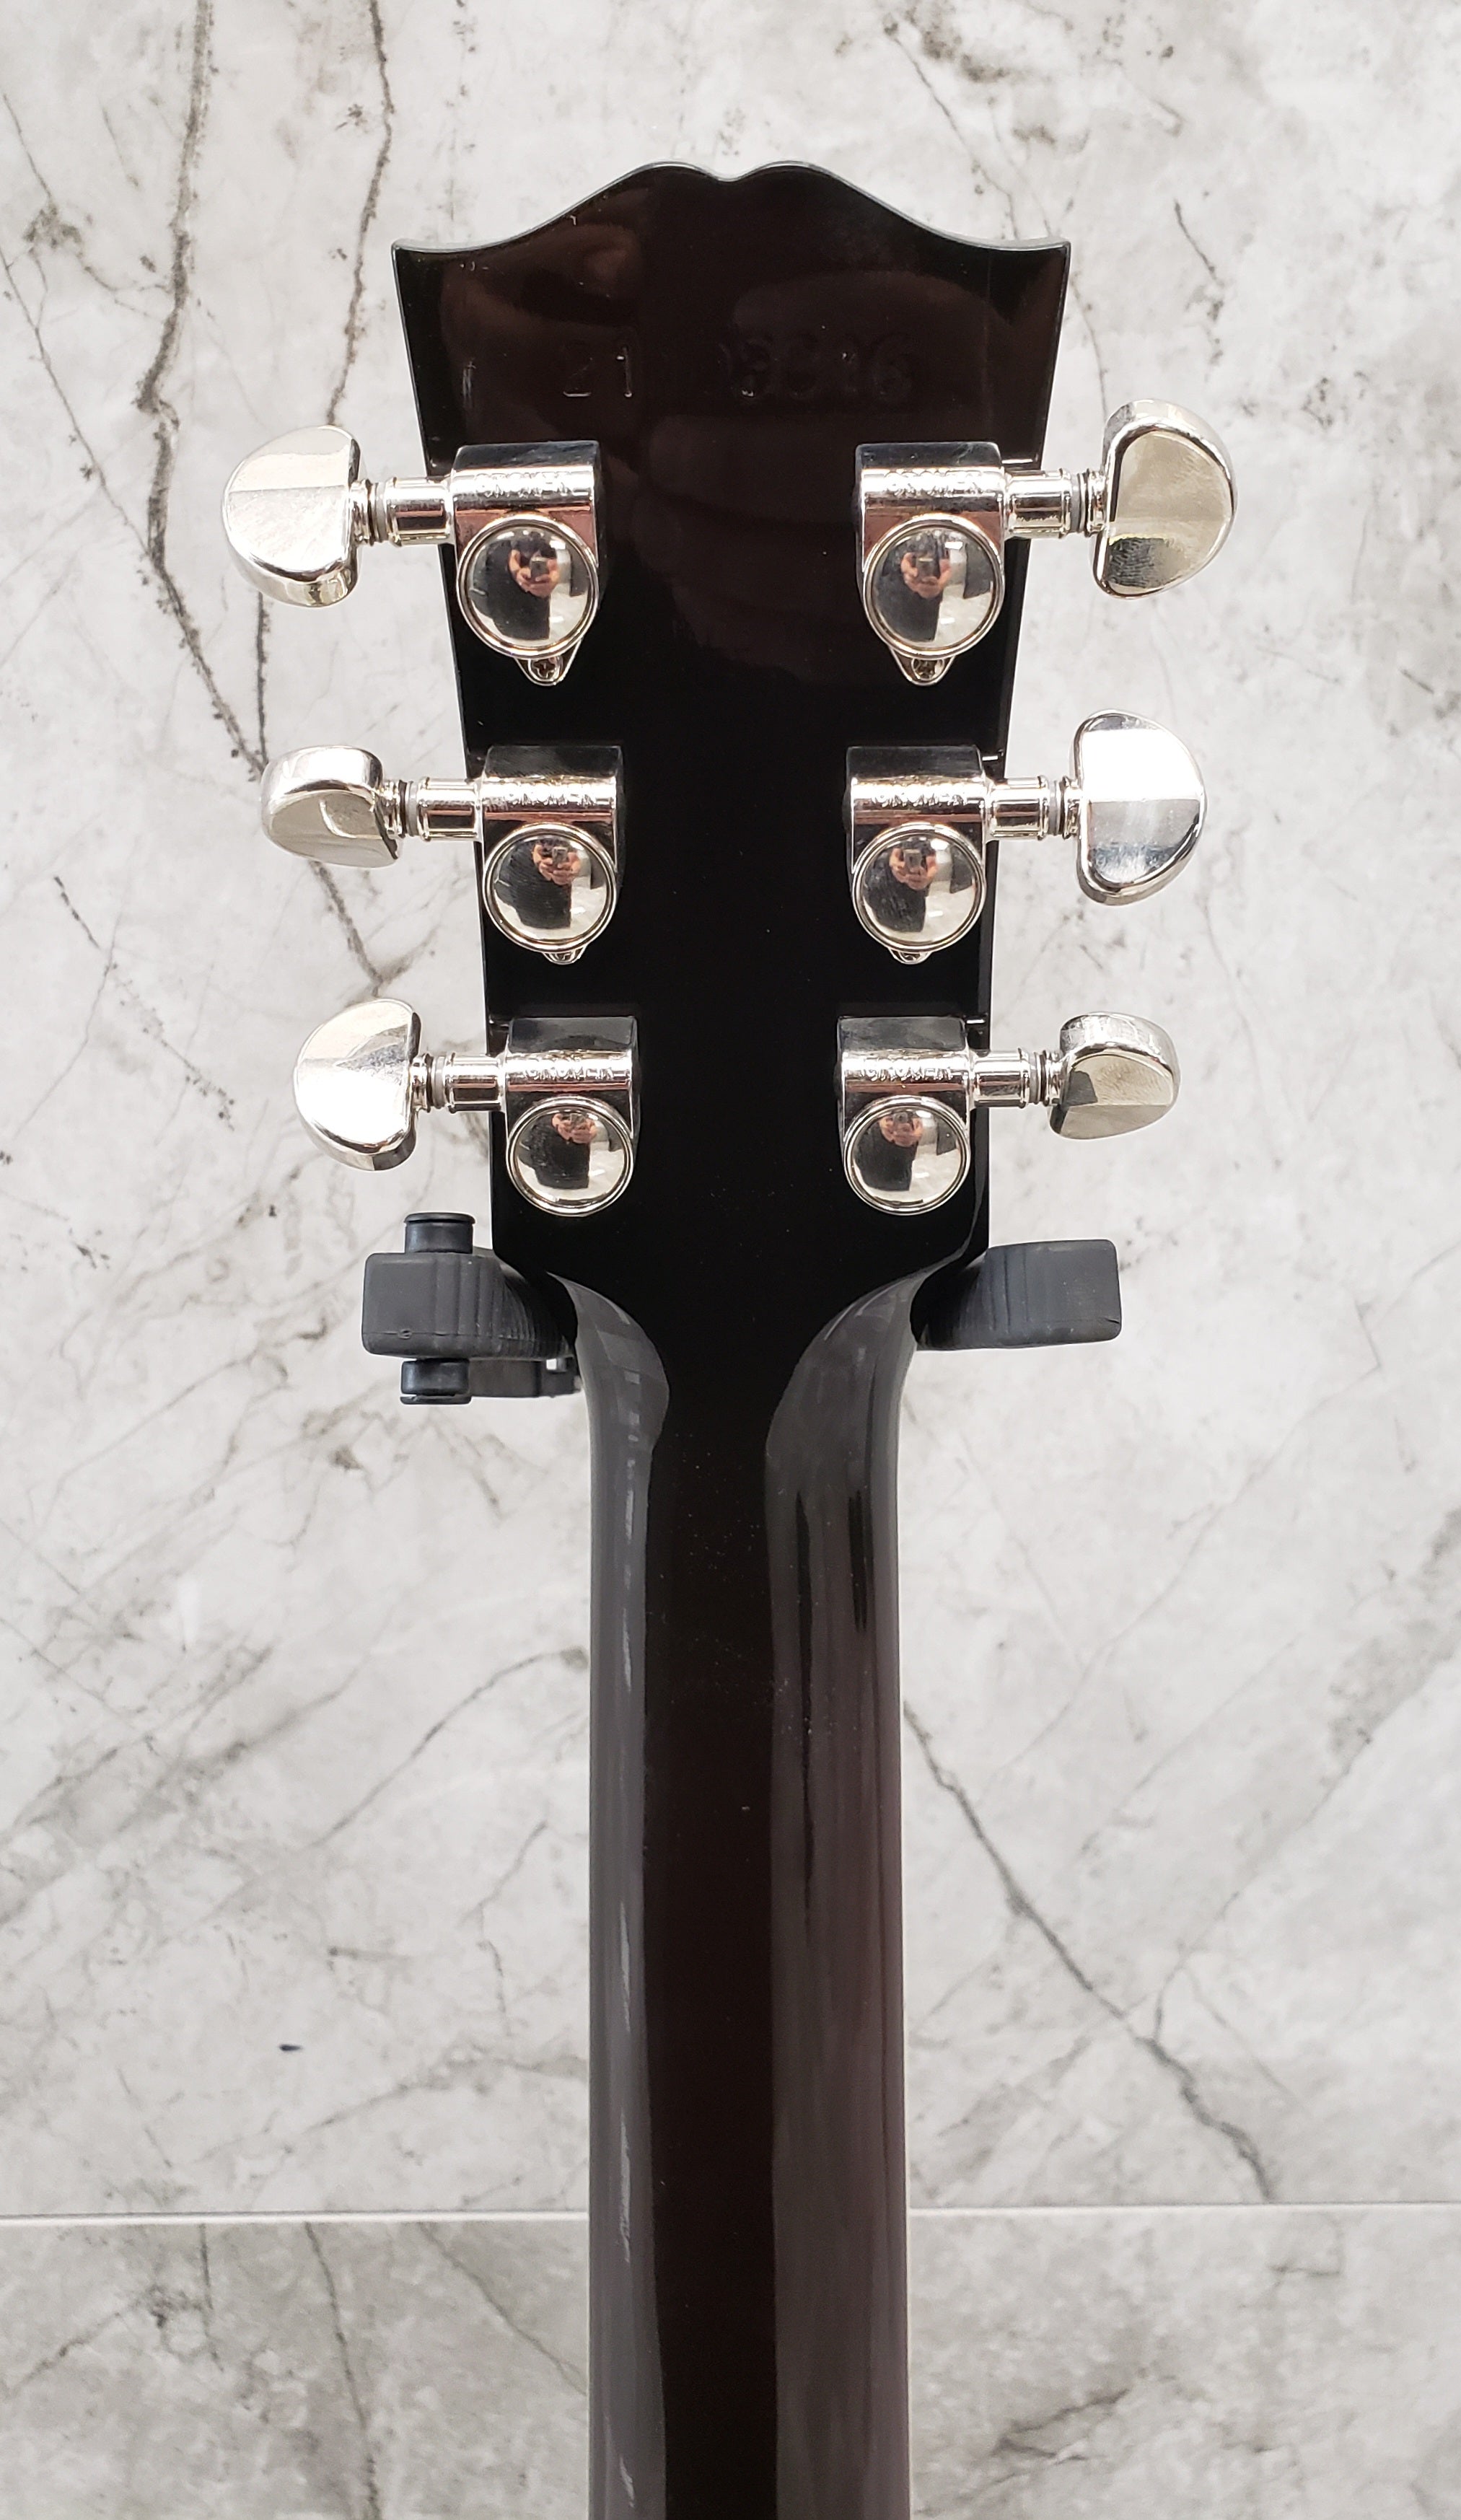 Gibson Hummingbird Standard - Vintage Sunburst ACHBSVSNH SERIAL NUMBER 21102016